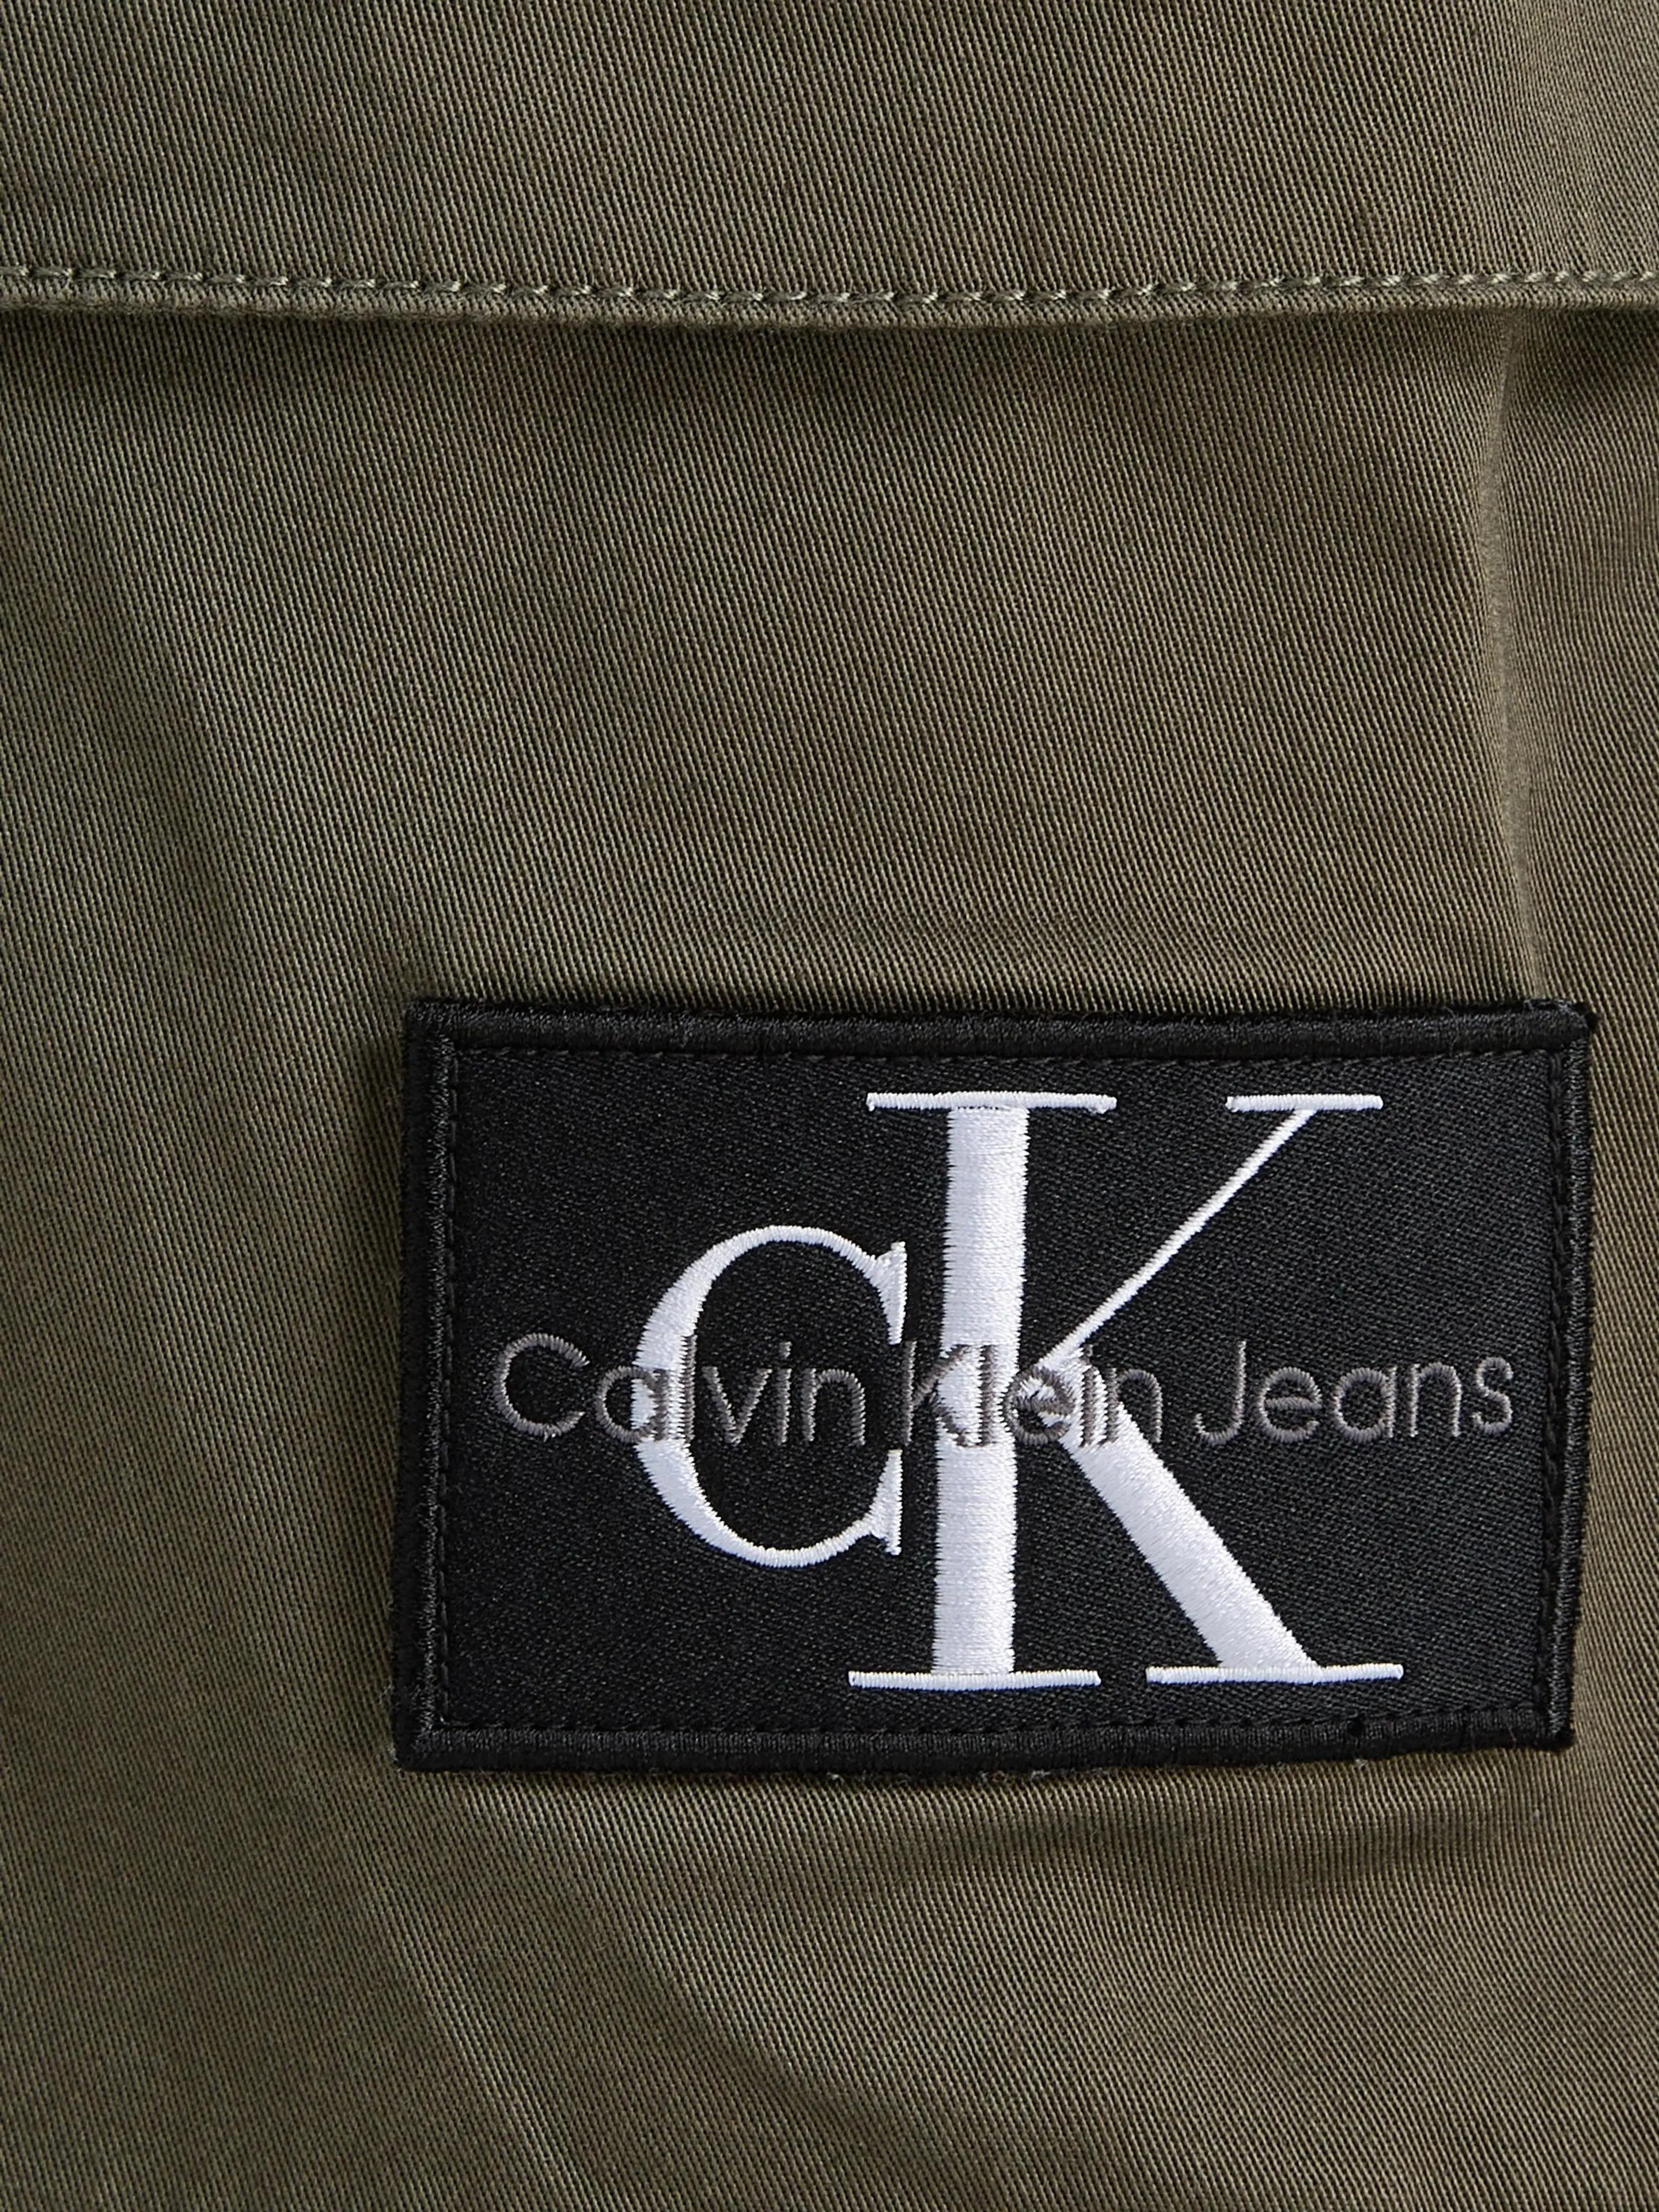 Calvin Klein Jeans Cargo shortsit